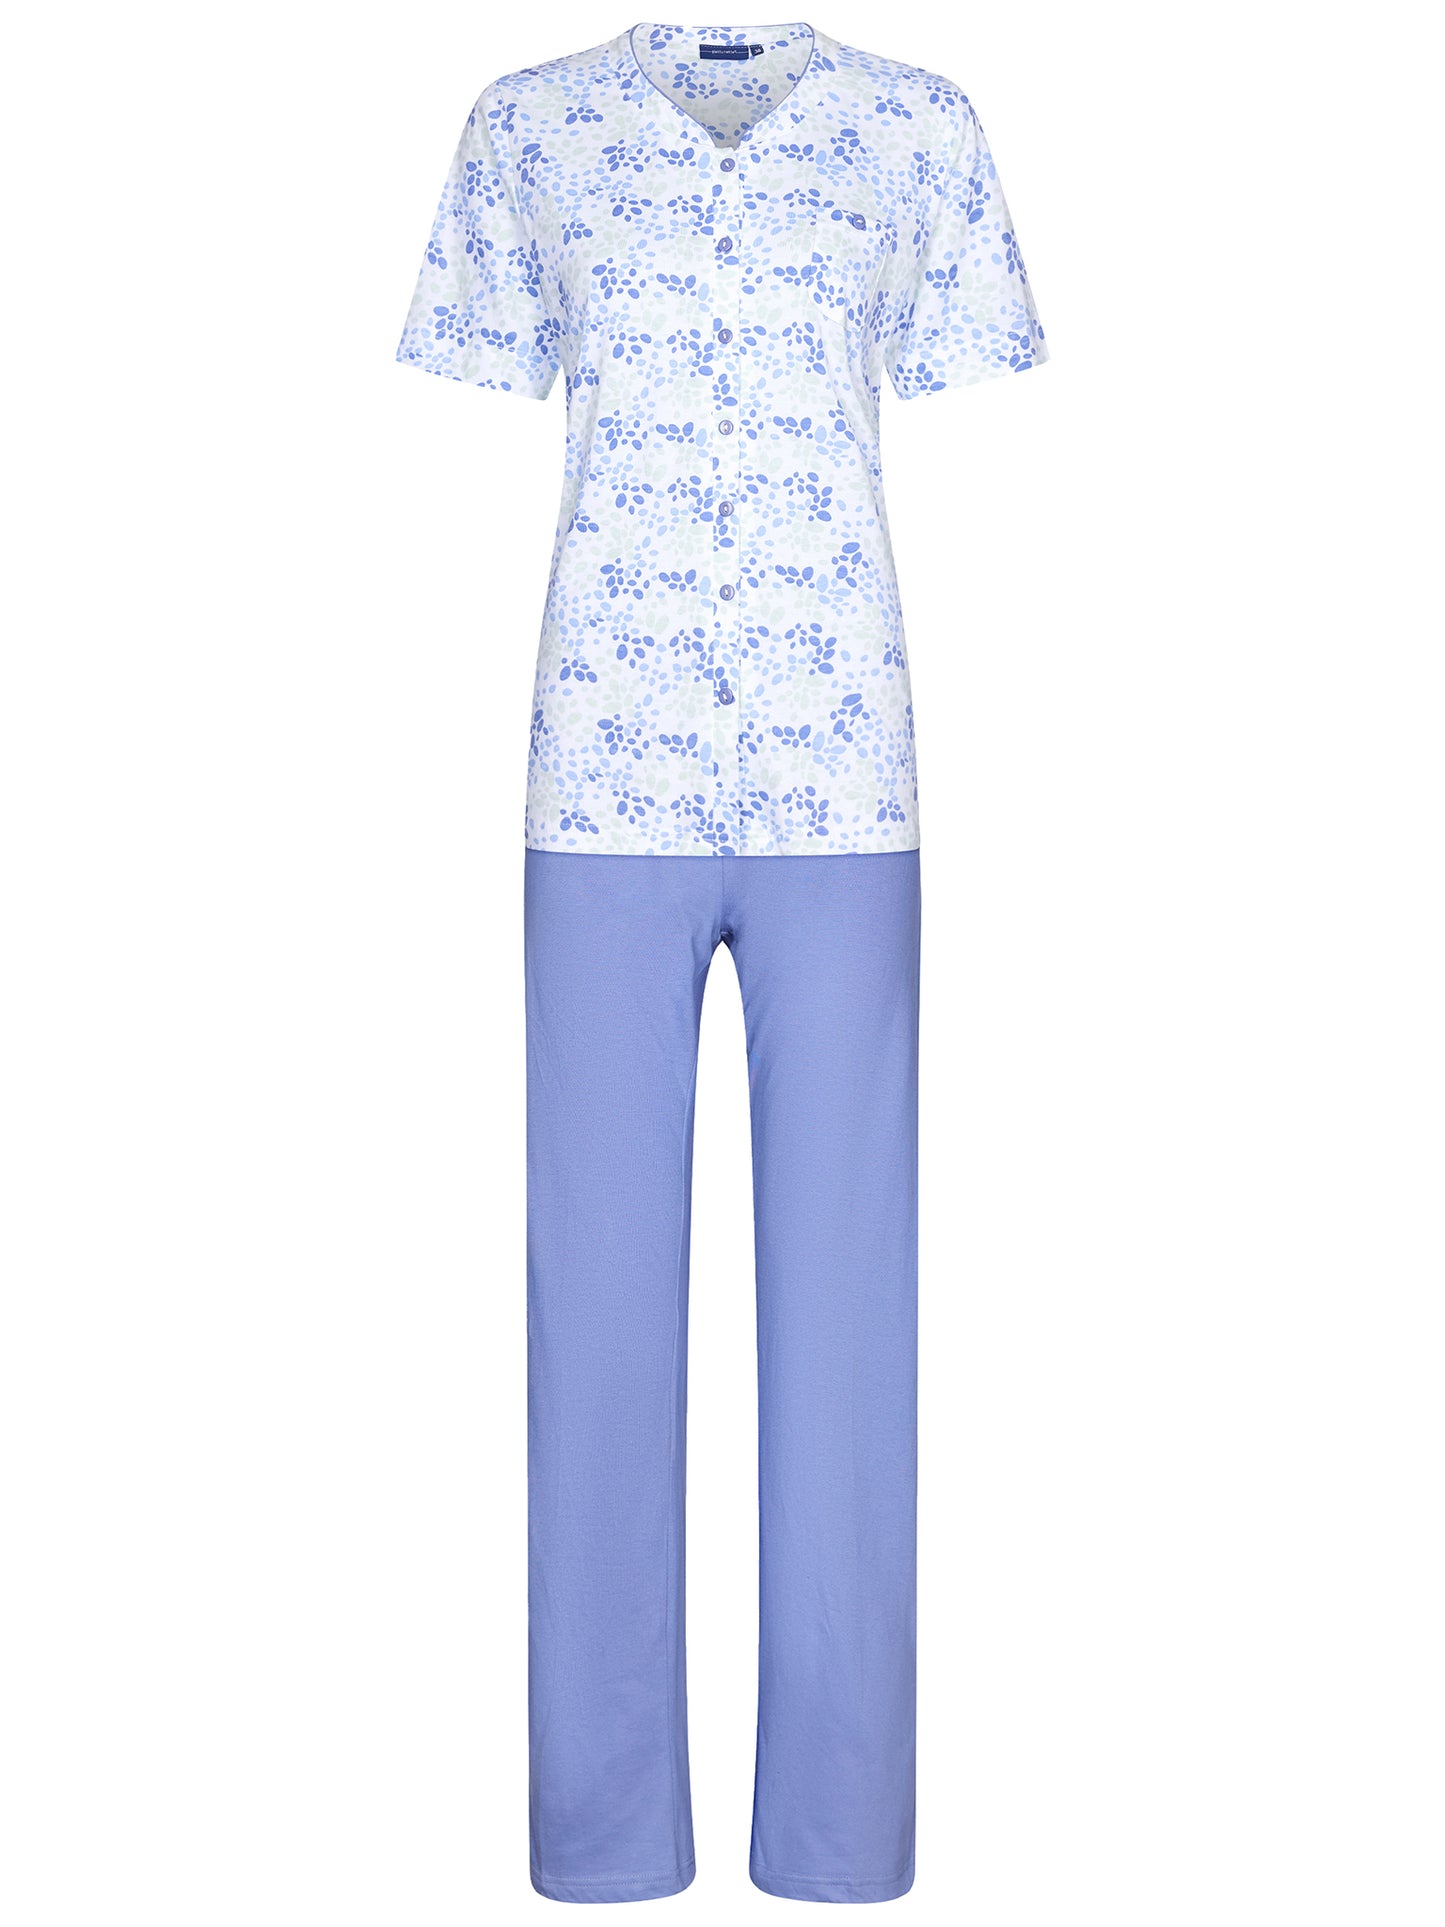 Pyjama long pants 20241-126-6 516 Blue